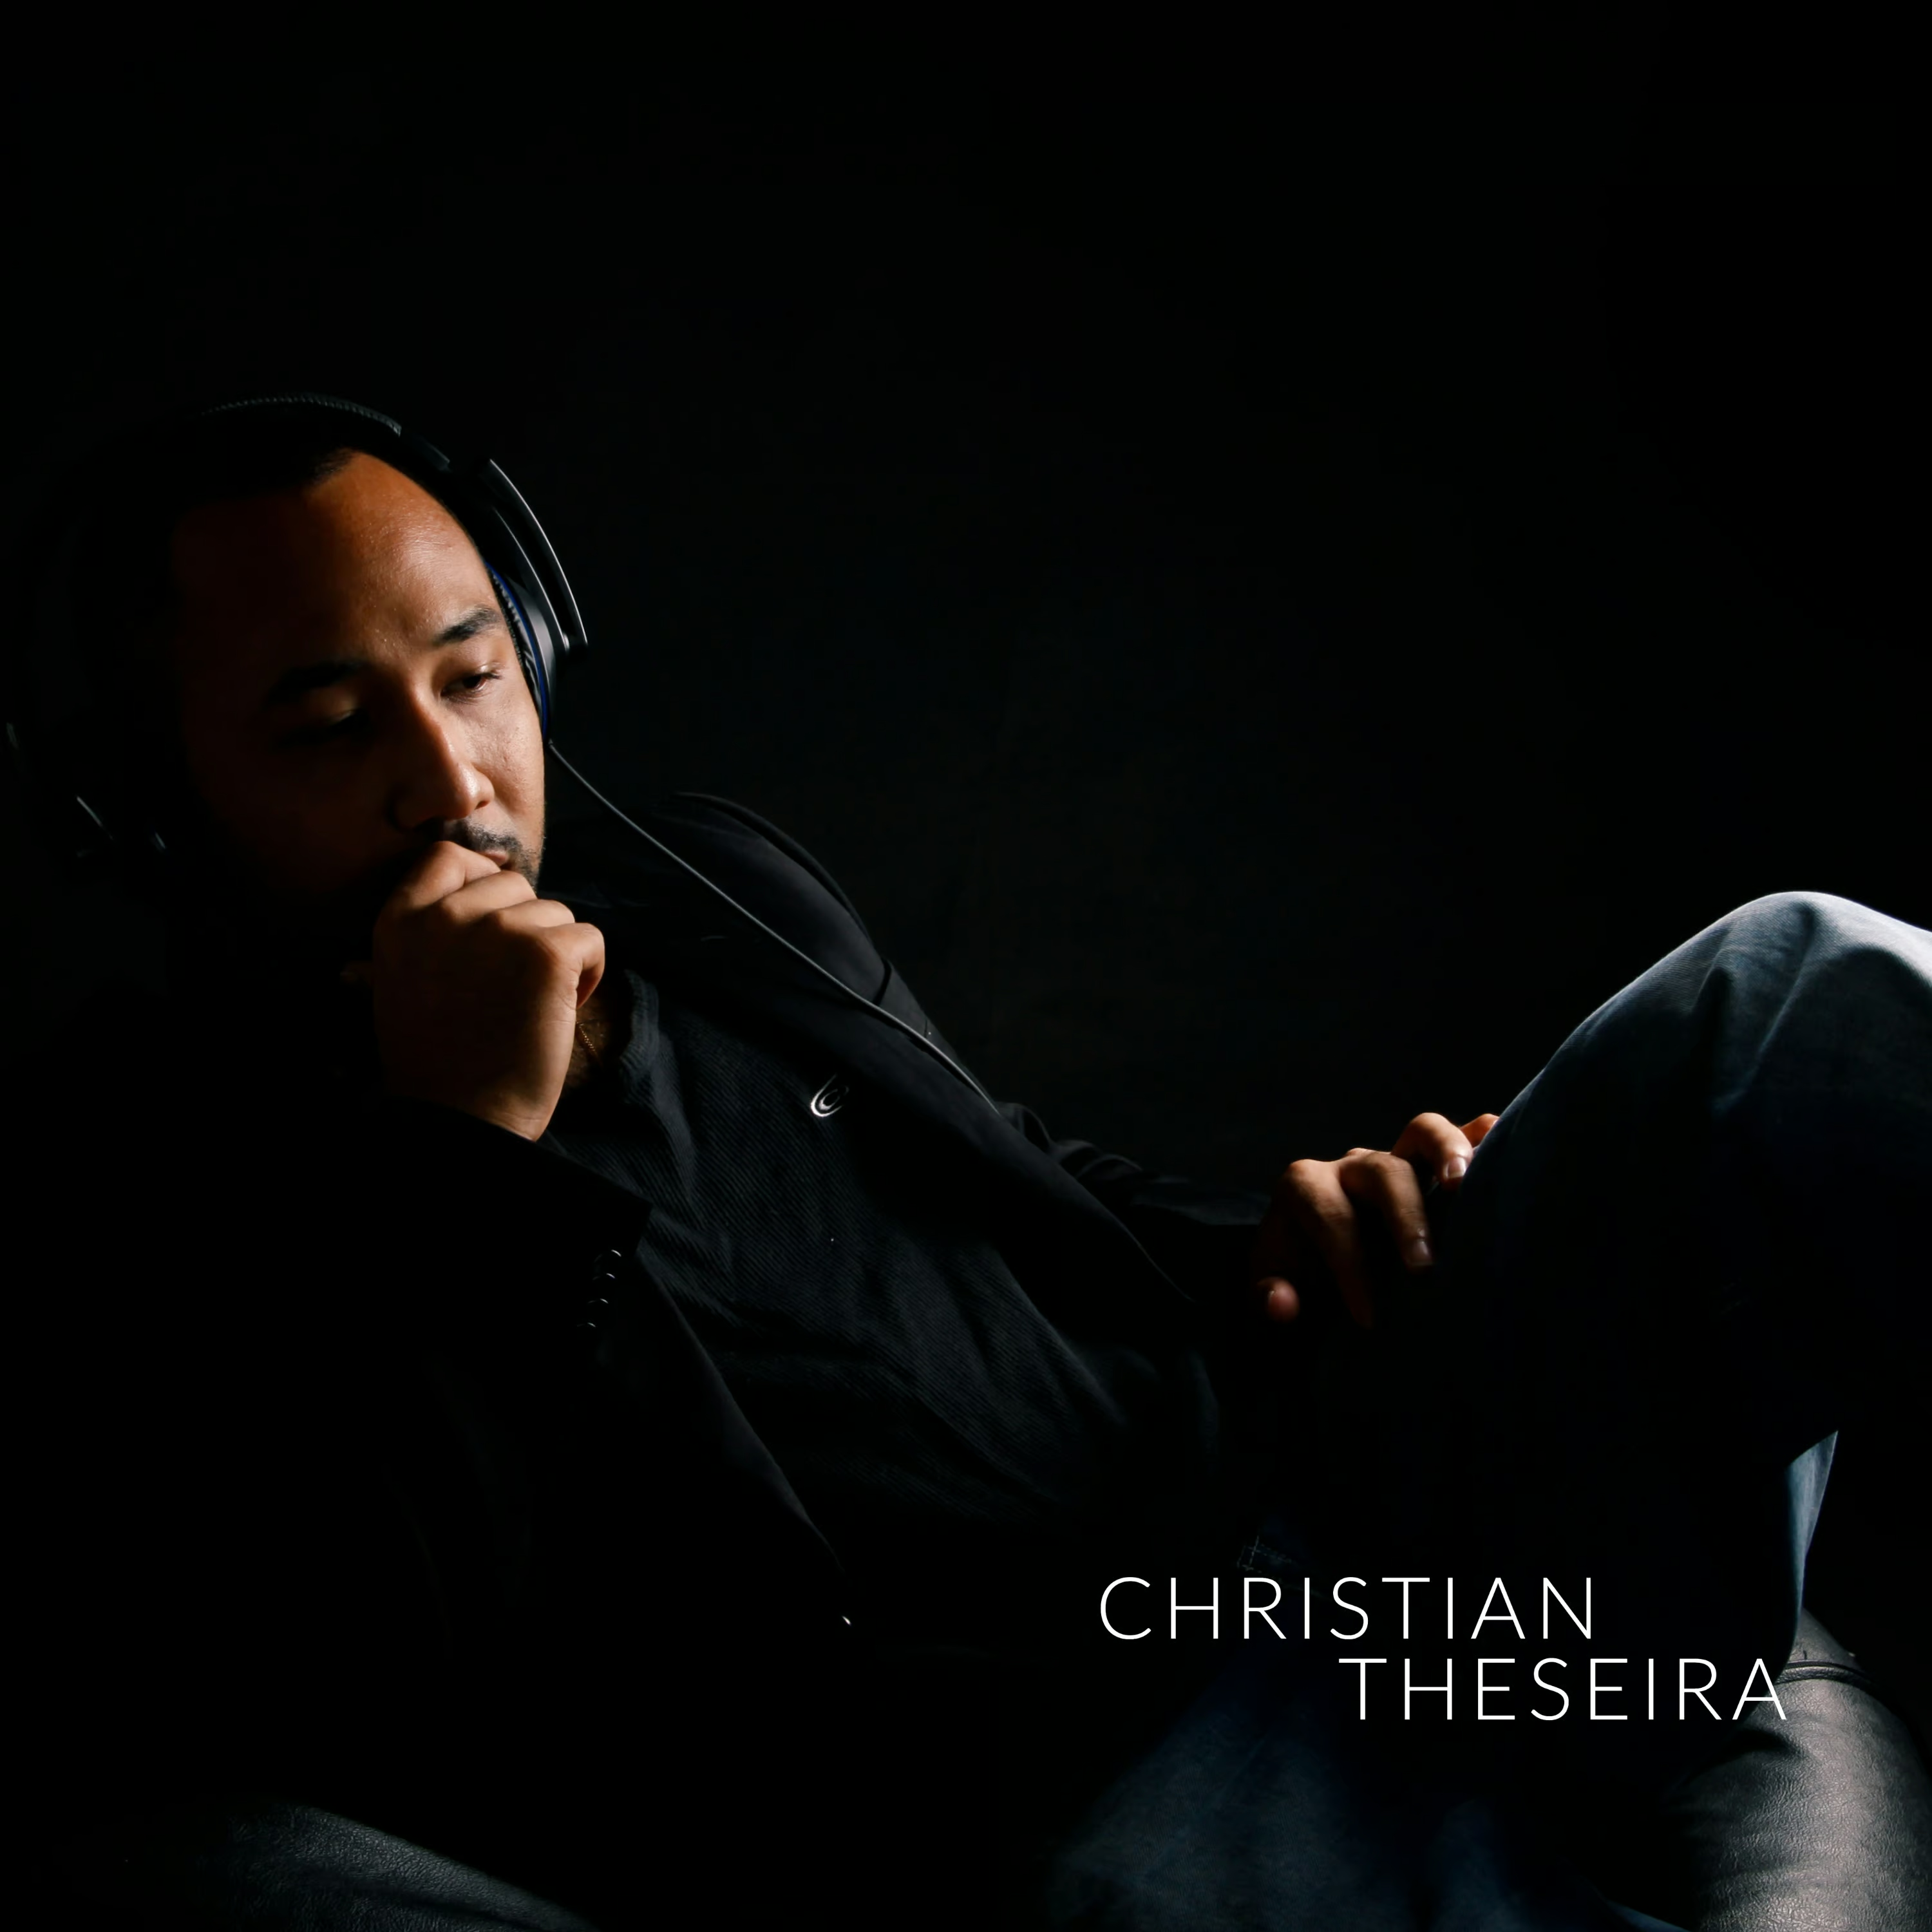 Christian Theseira - Full Album NFT